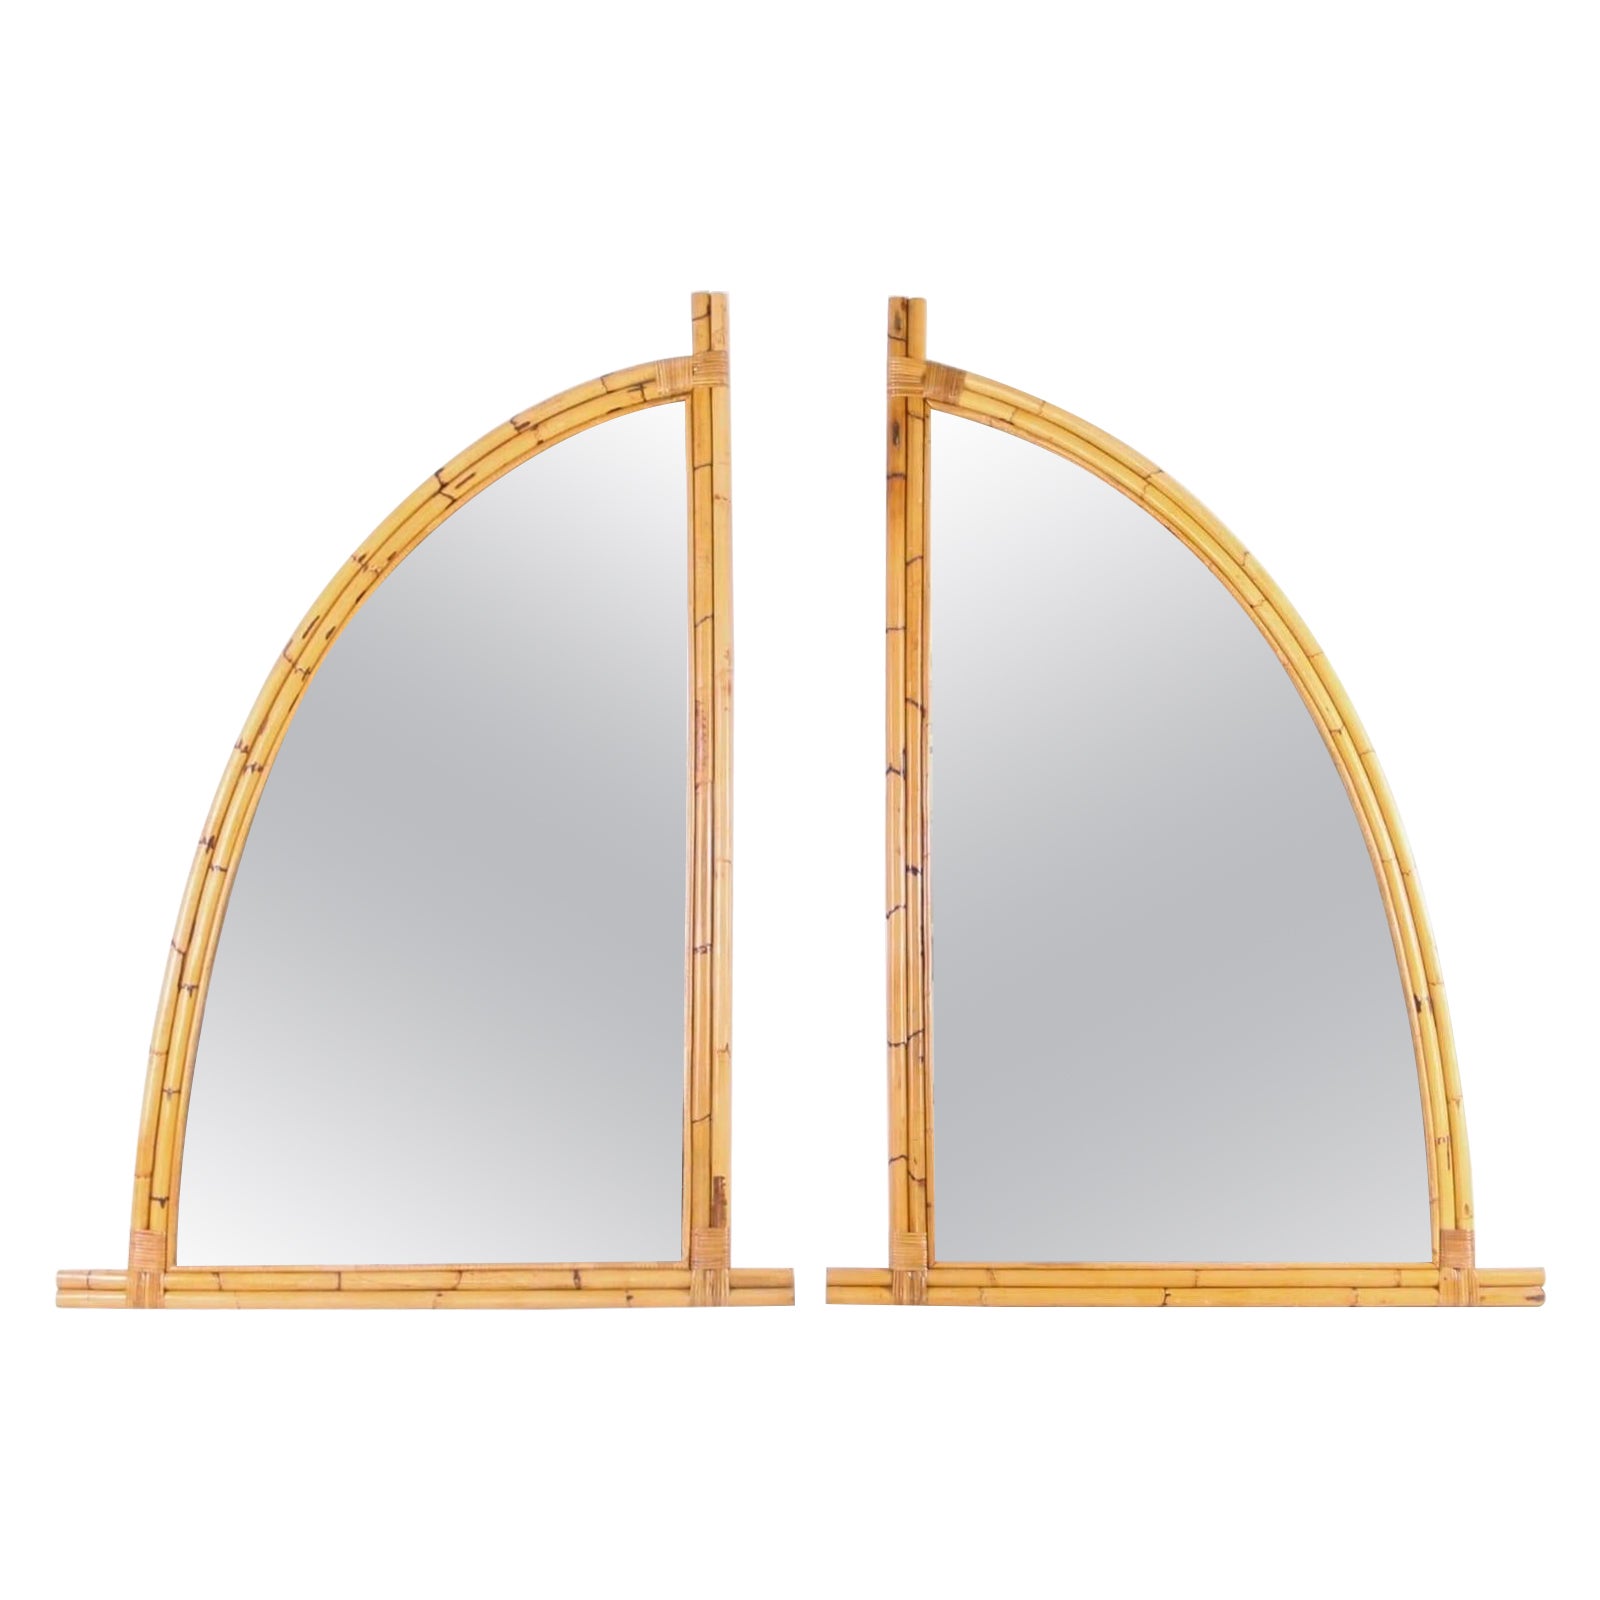 Pair of large rattan « sails » mirrors 